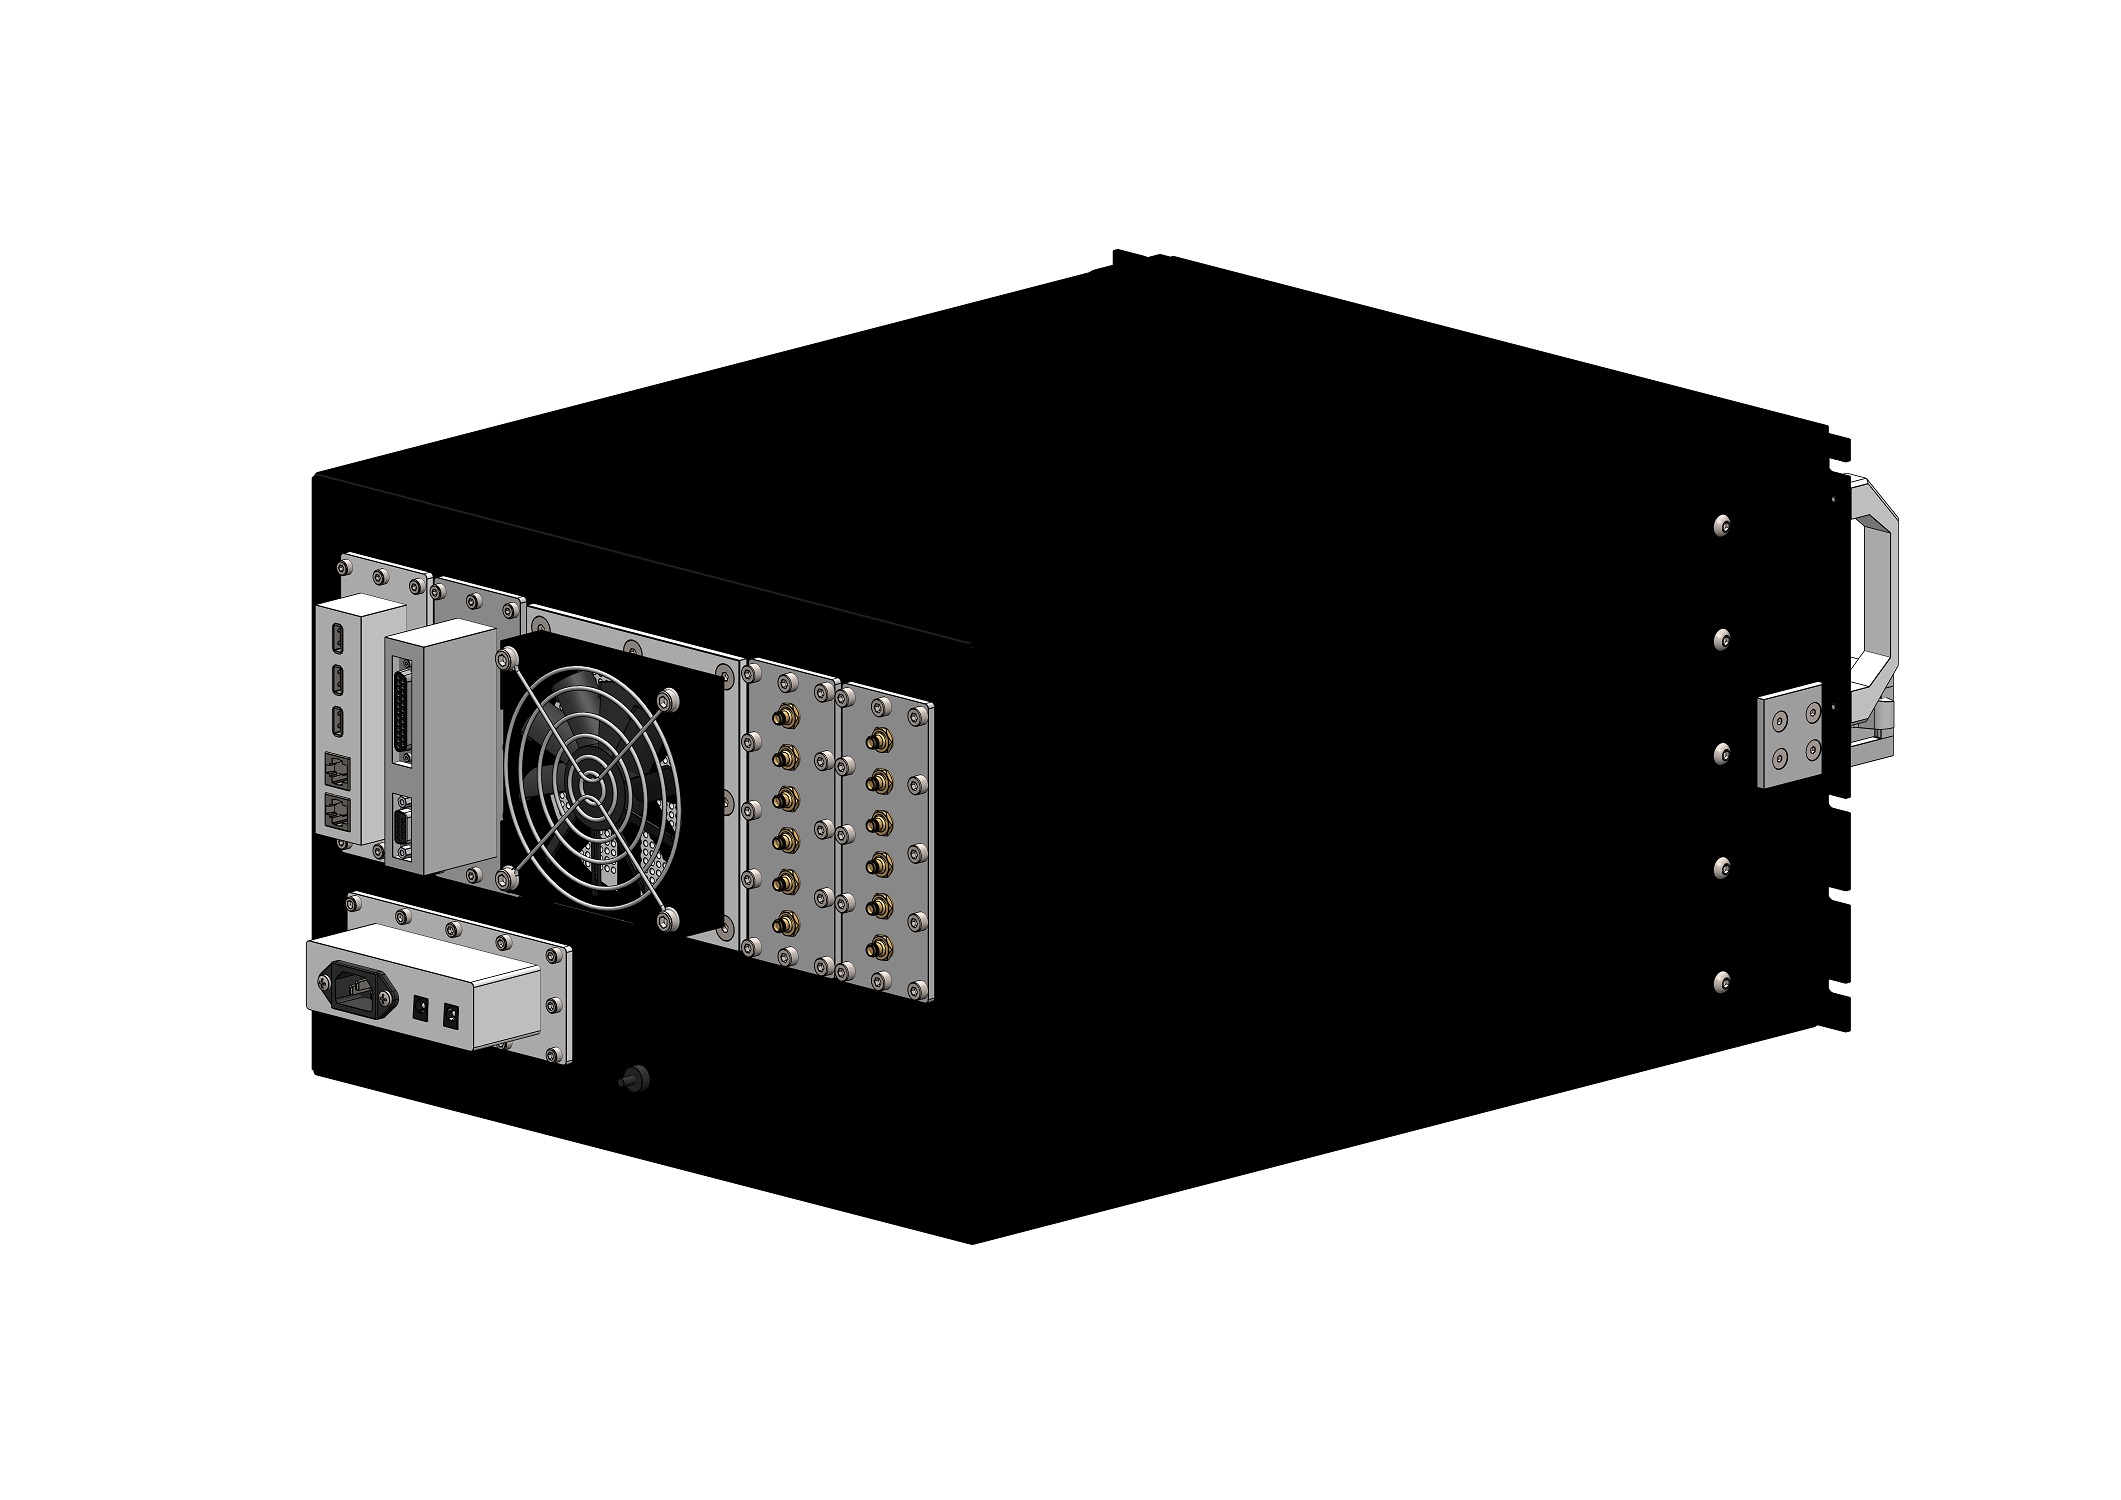 HDRF-1160-AG RF Shield Test Box